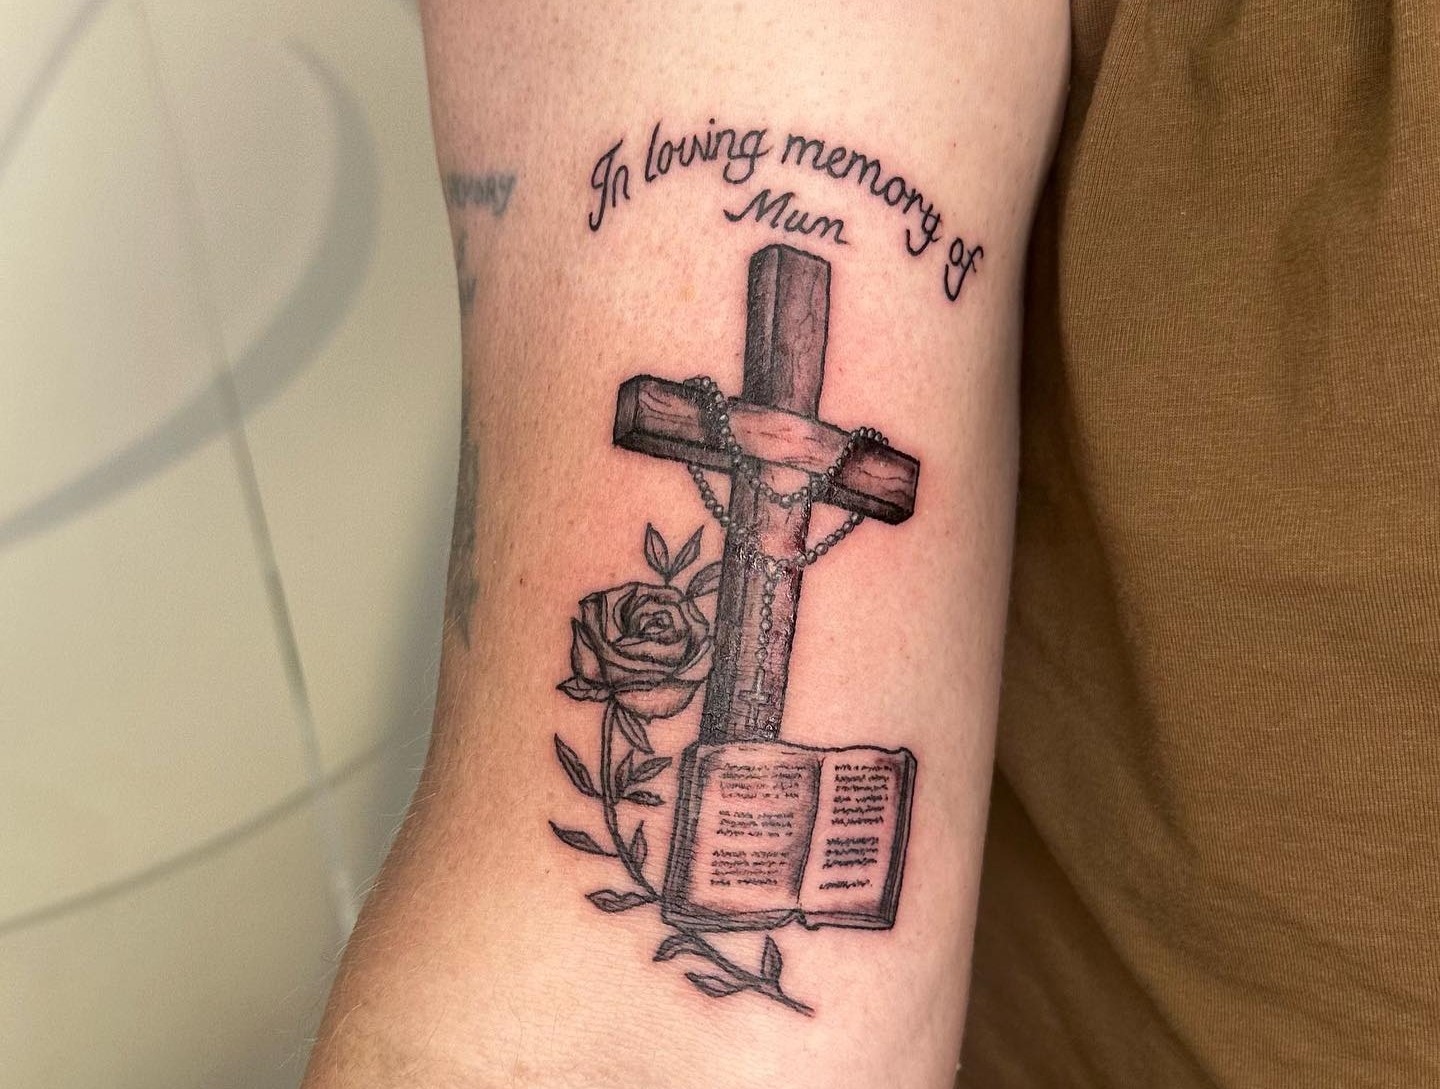 Untold Pain Tattoo Studio - This beautiful, simple cross says it all 🙏 |  Facebook